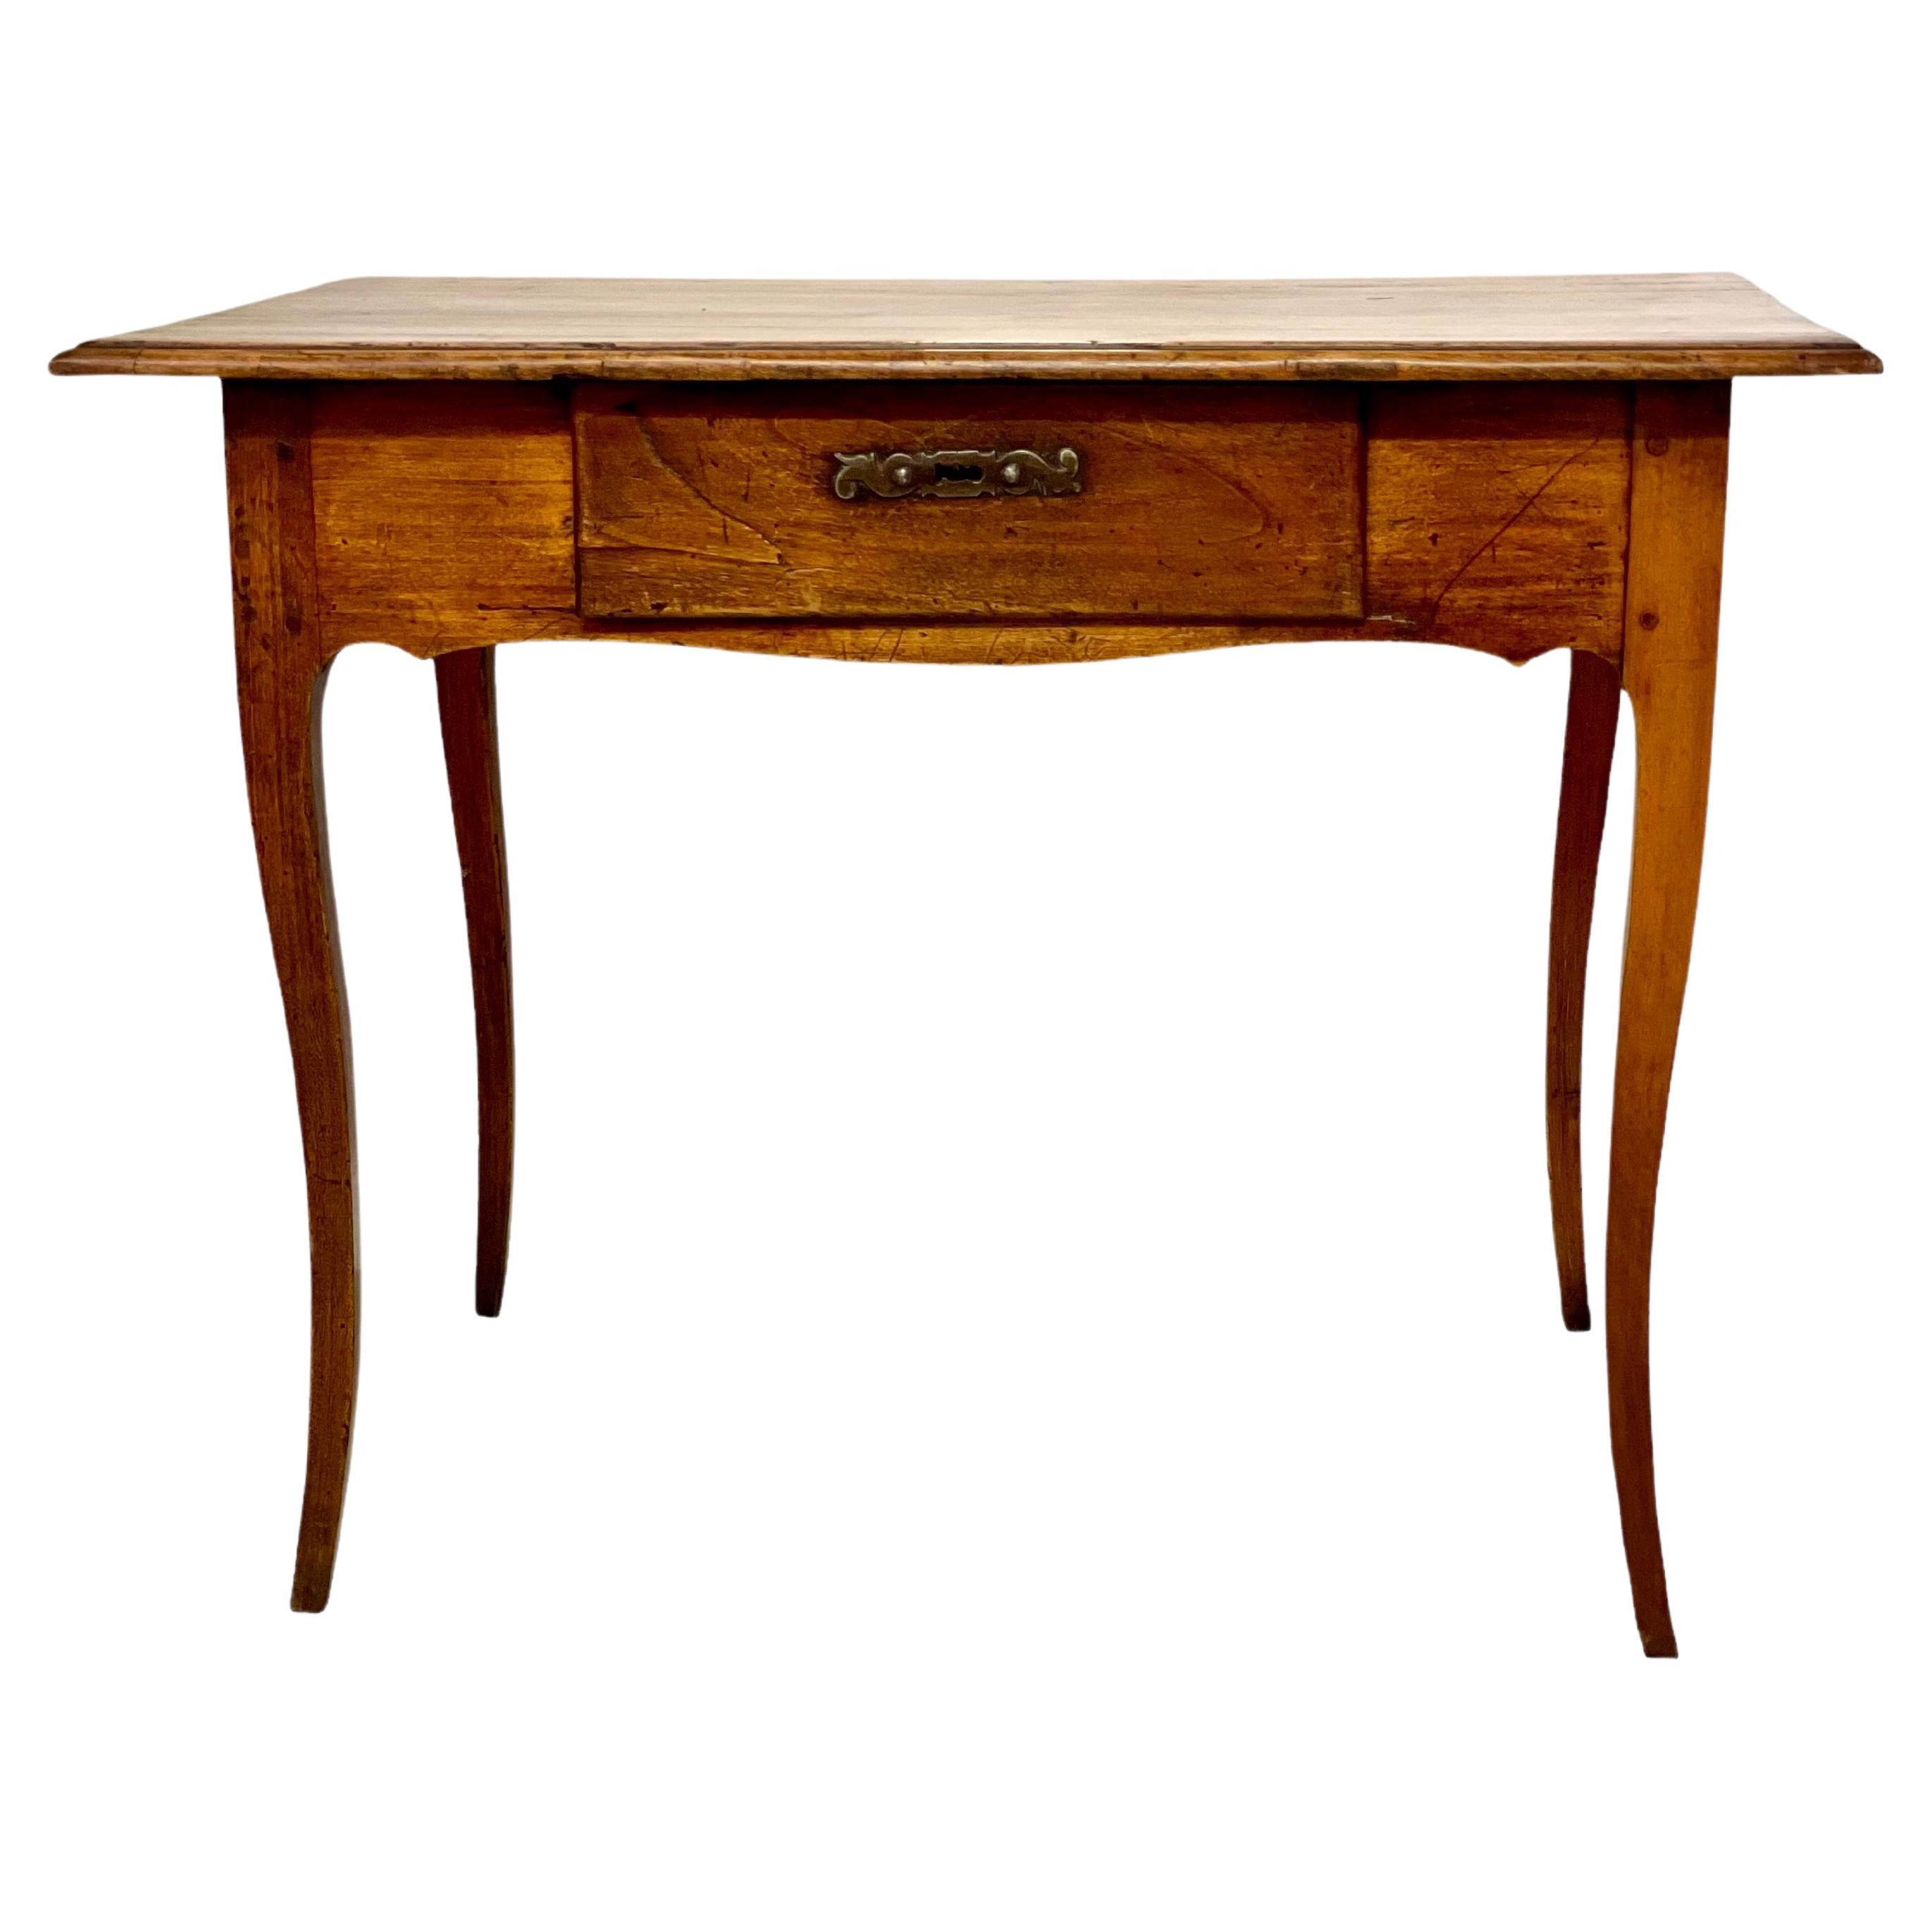 What are antique desks called?